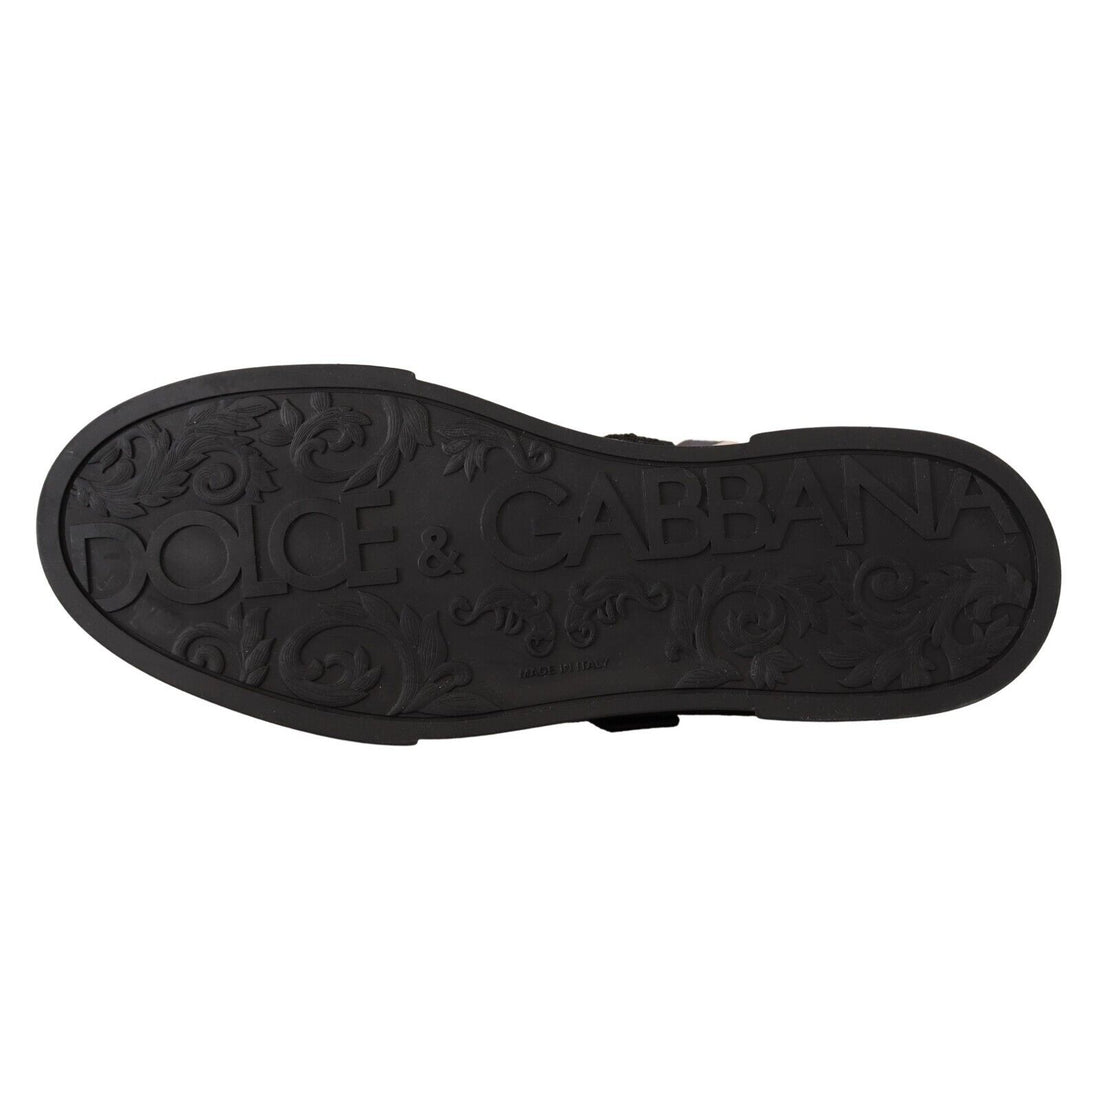 Dolce & Gabbana Zebra Suede Low Top Fashion Sneakers